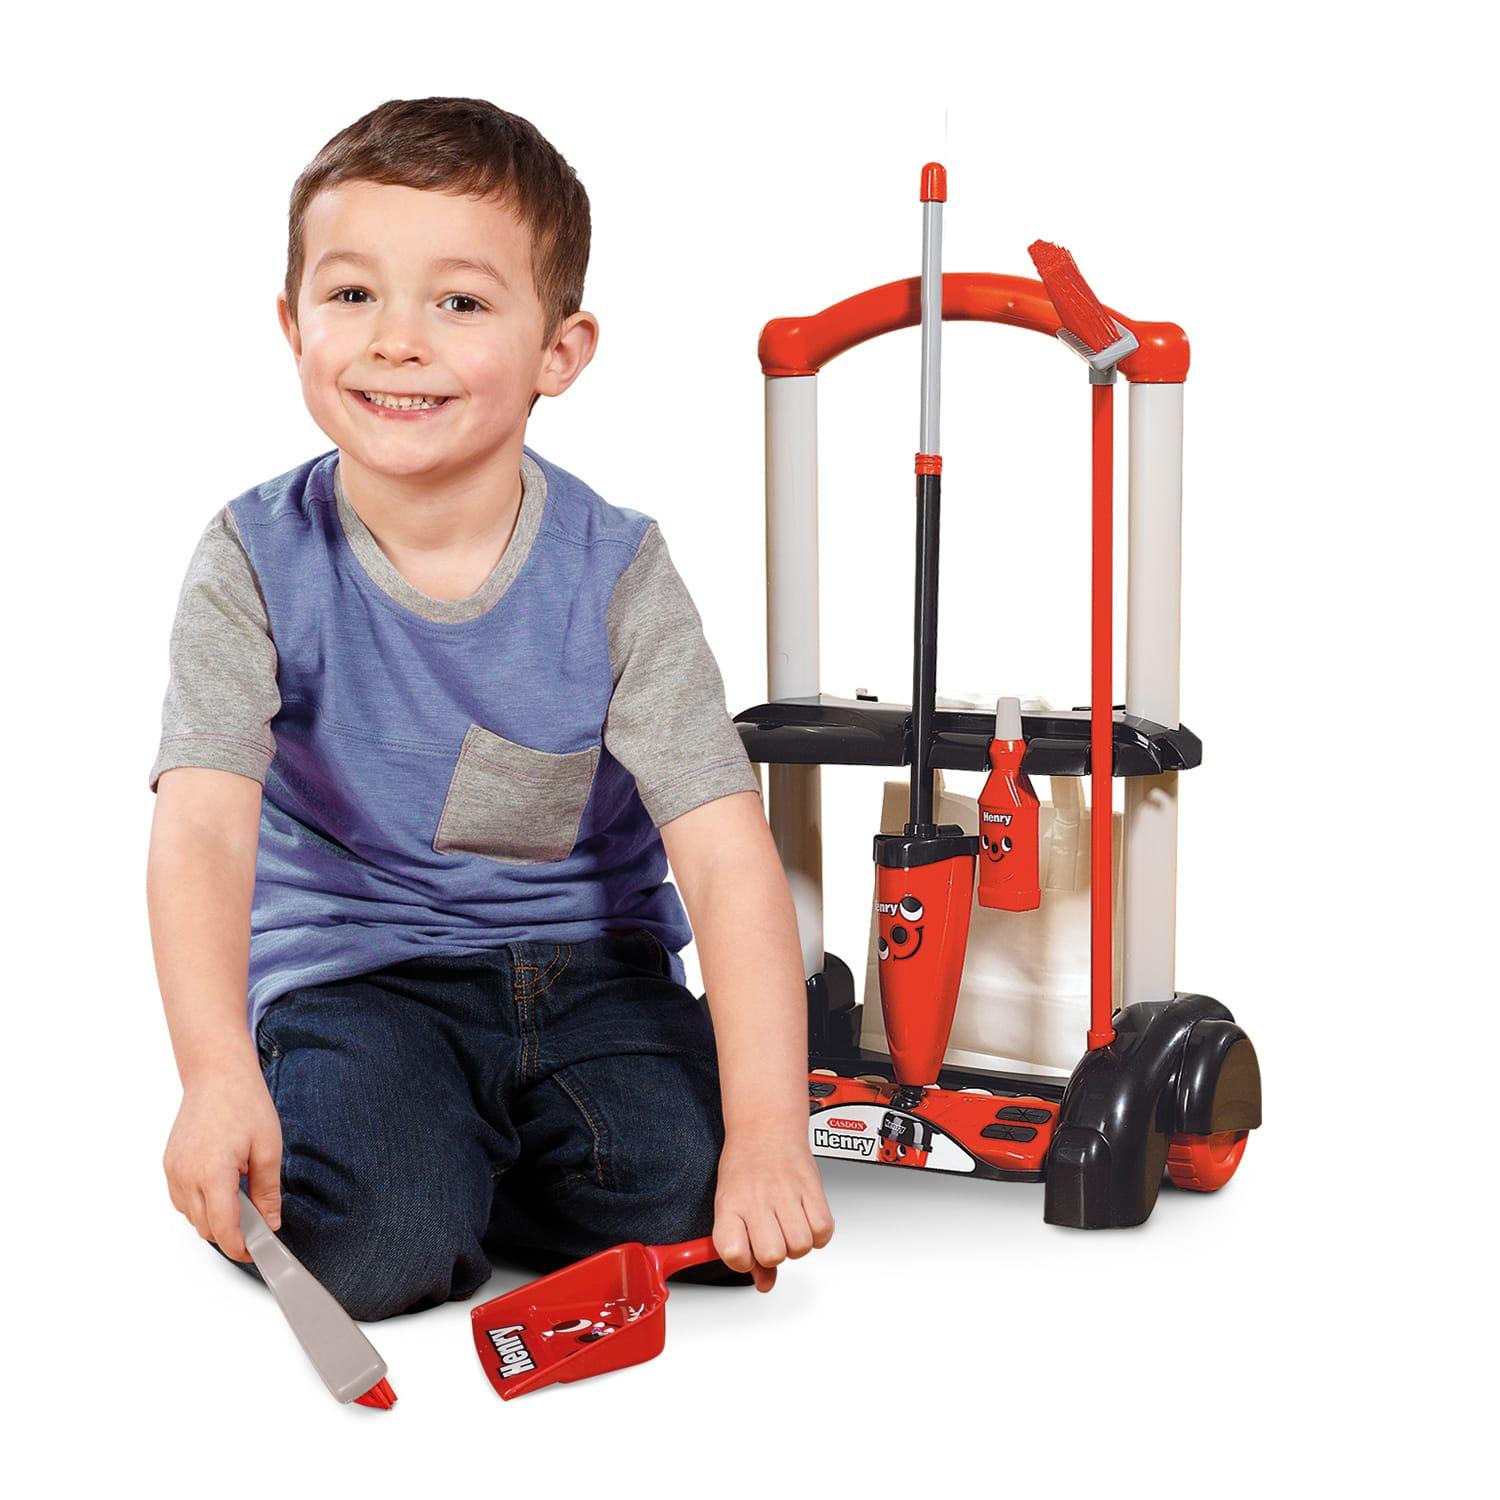 Casdon 630 Hetty Cleaning Trolley Hoover Mop Brush Children Kids Toys Play Set 